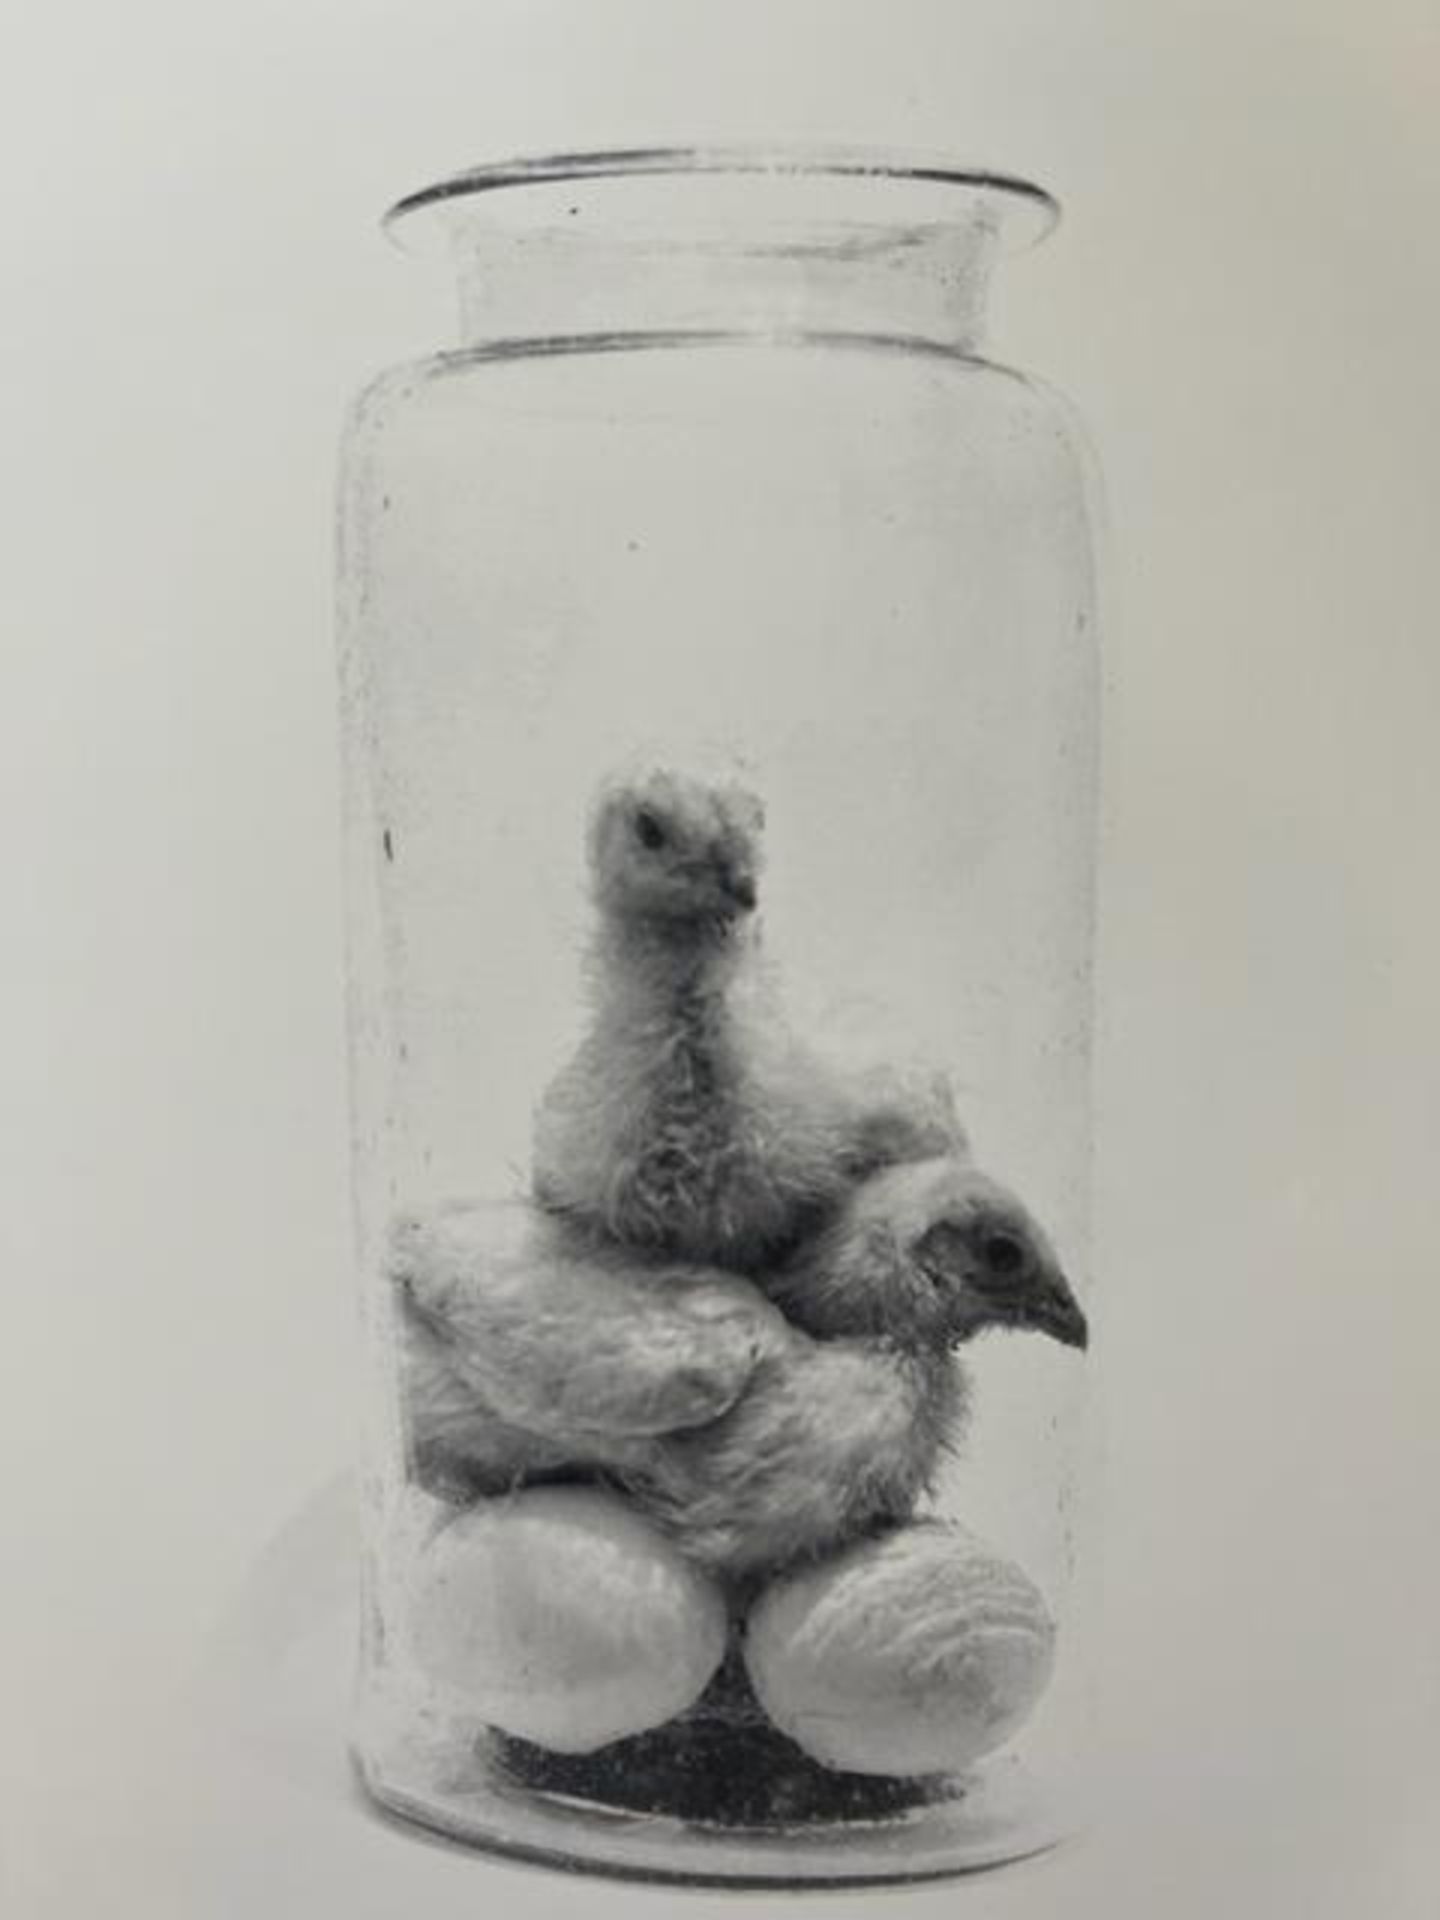 Irving Penn "Chicks in a Jar" Print.